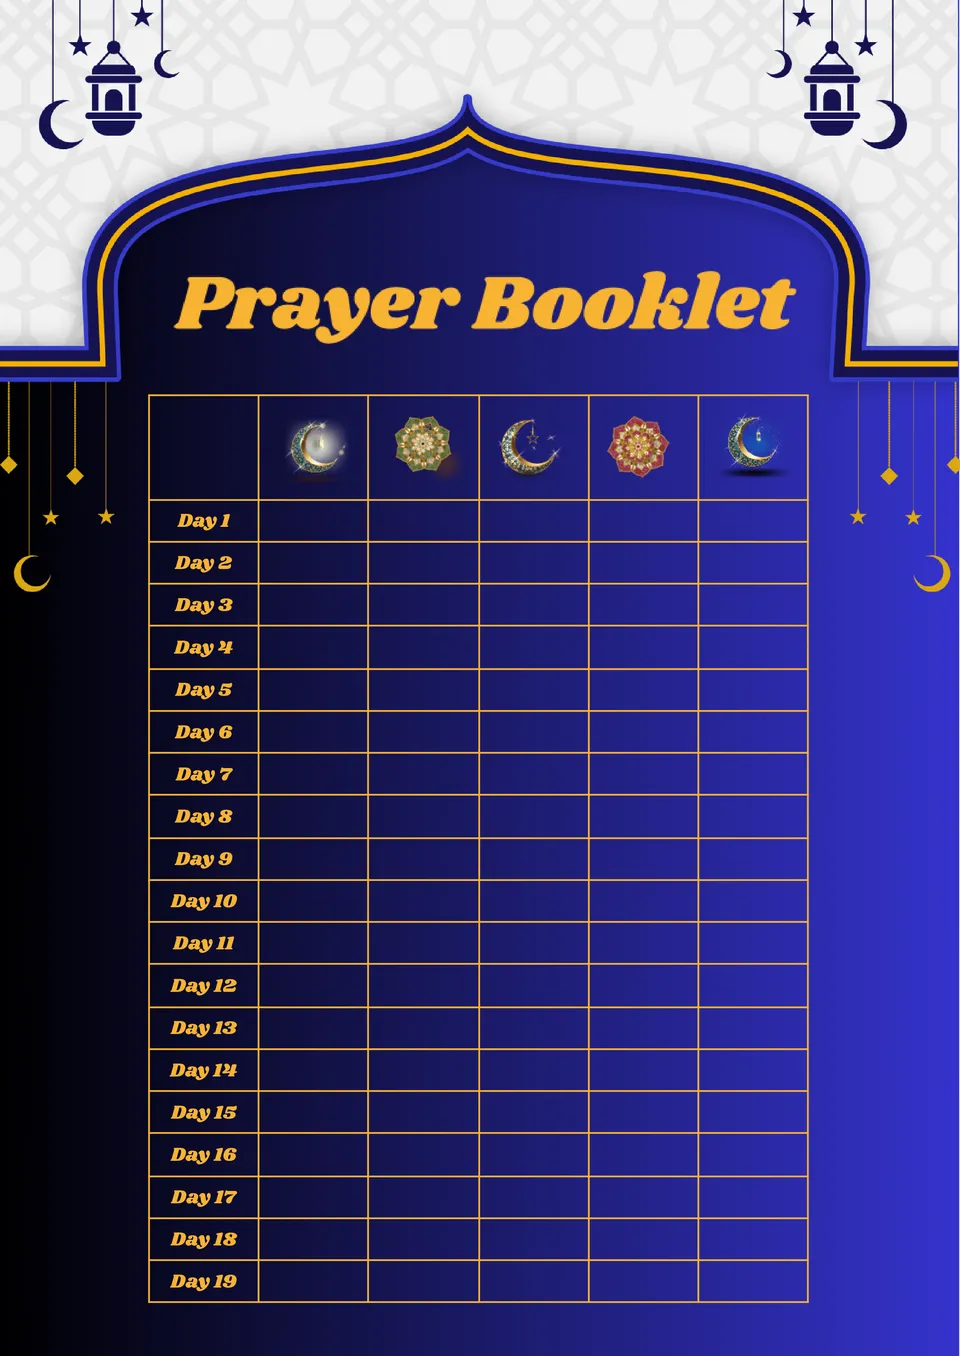 Prayer Booklet Template